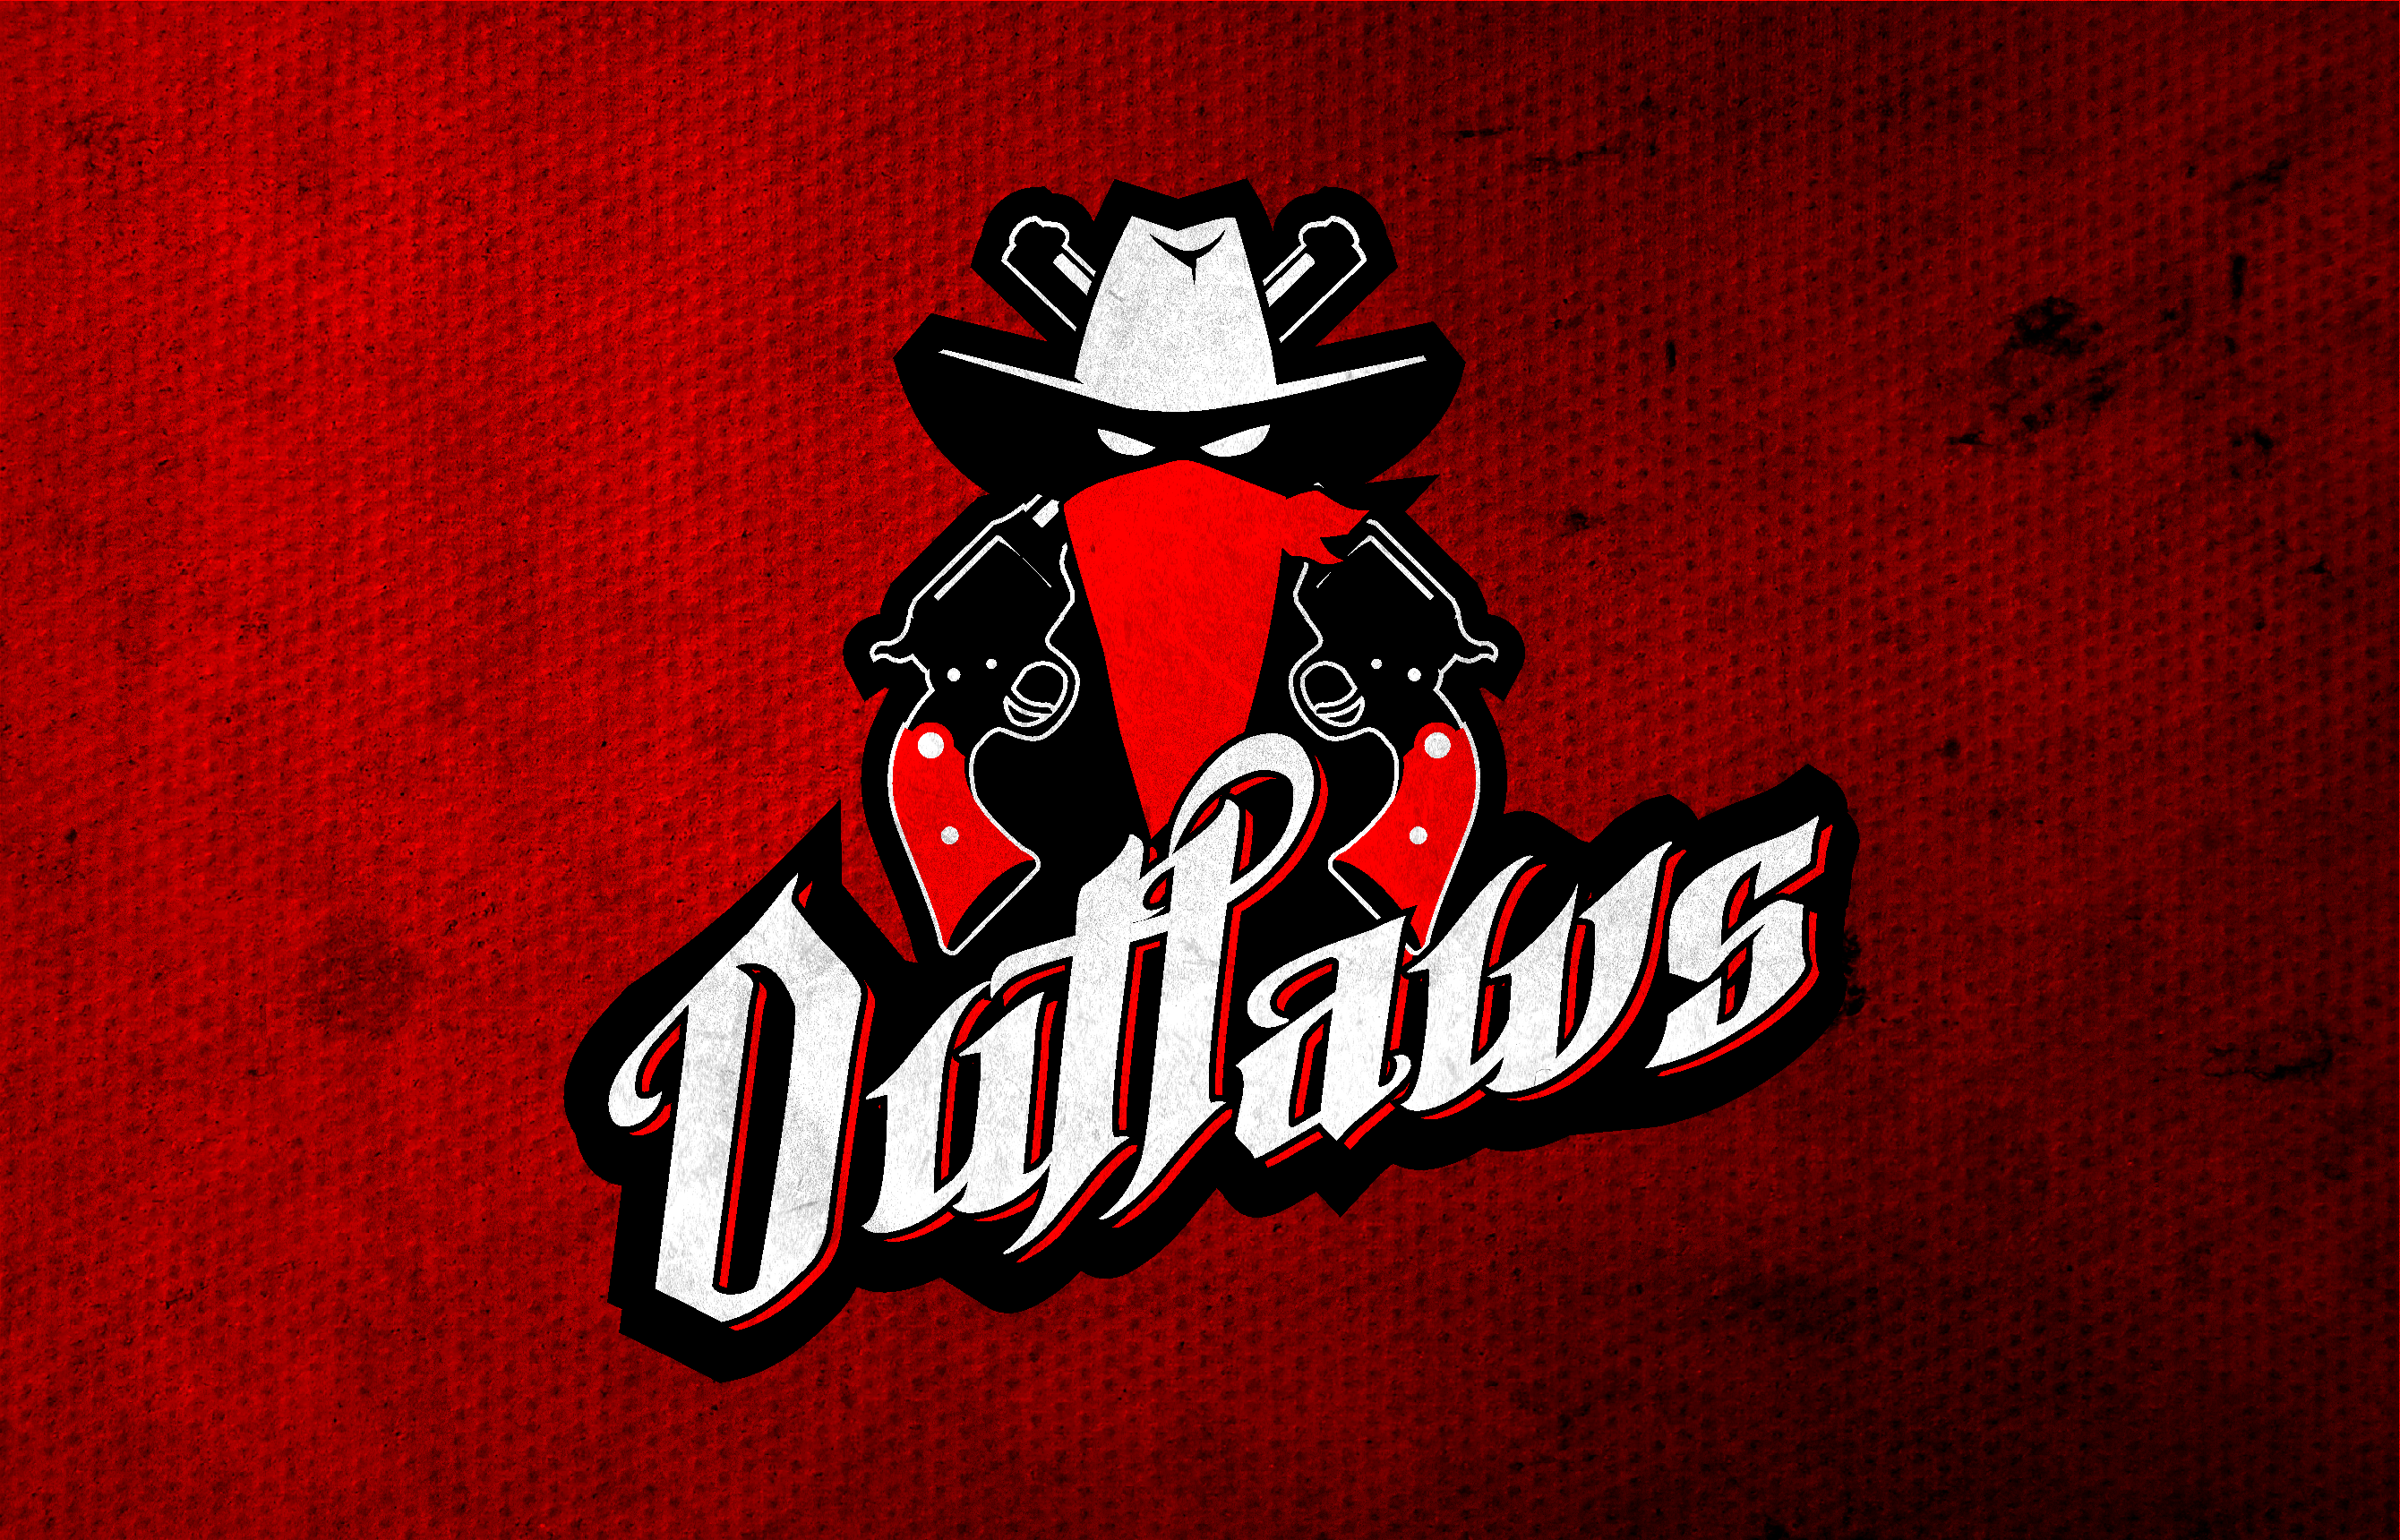 Outlaws Logo - Outlaws Logo | outlaws baseball club by ENOTSdesign on DeviantArt ...